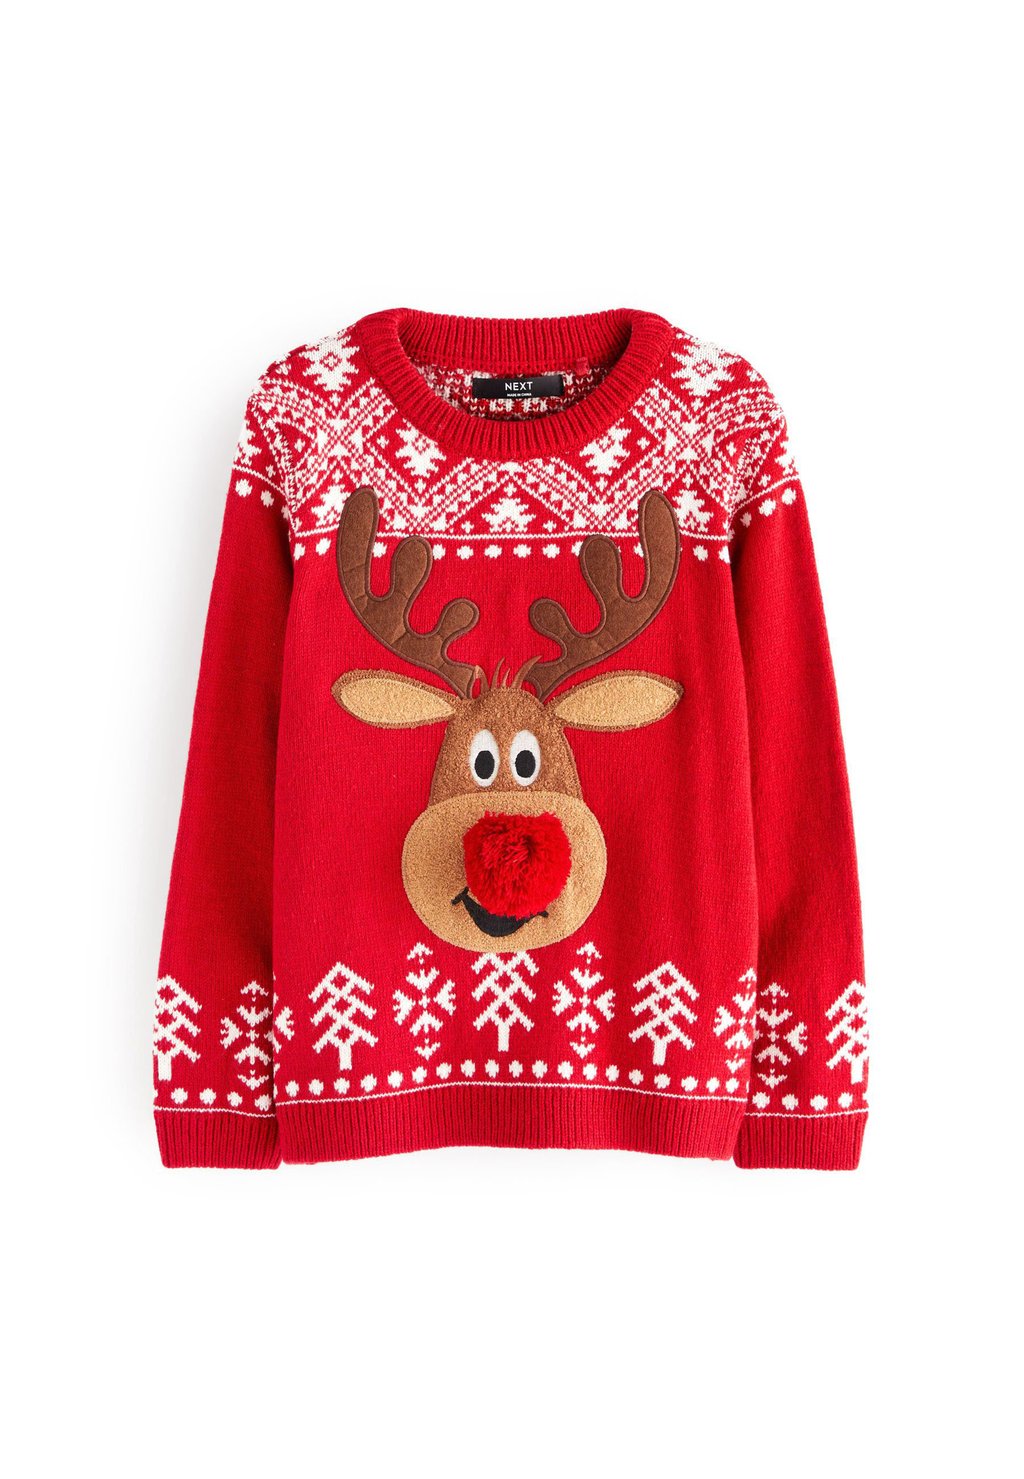 Вязаный свитер CHRISTMAS , цвет red reindeer fairisle pattern Next